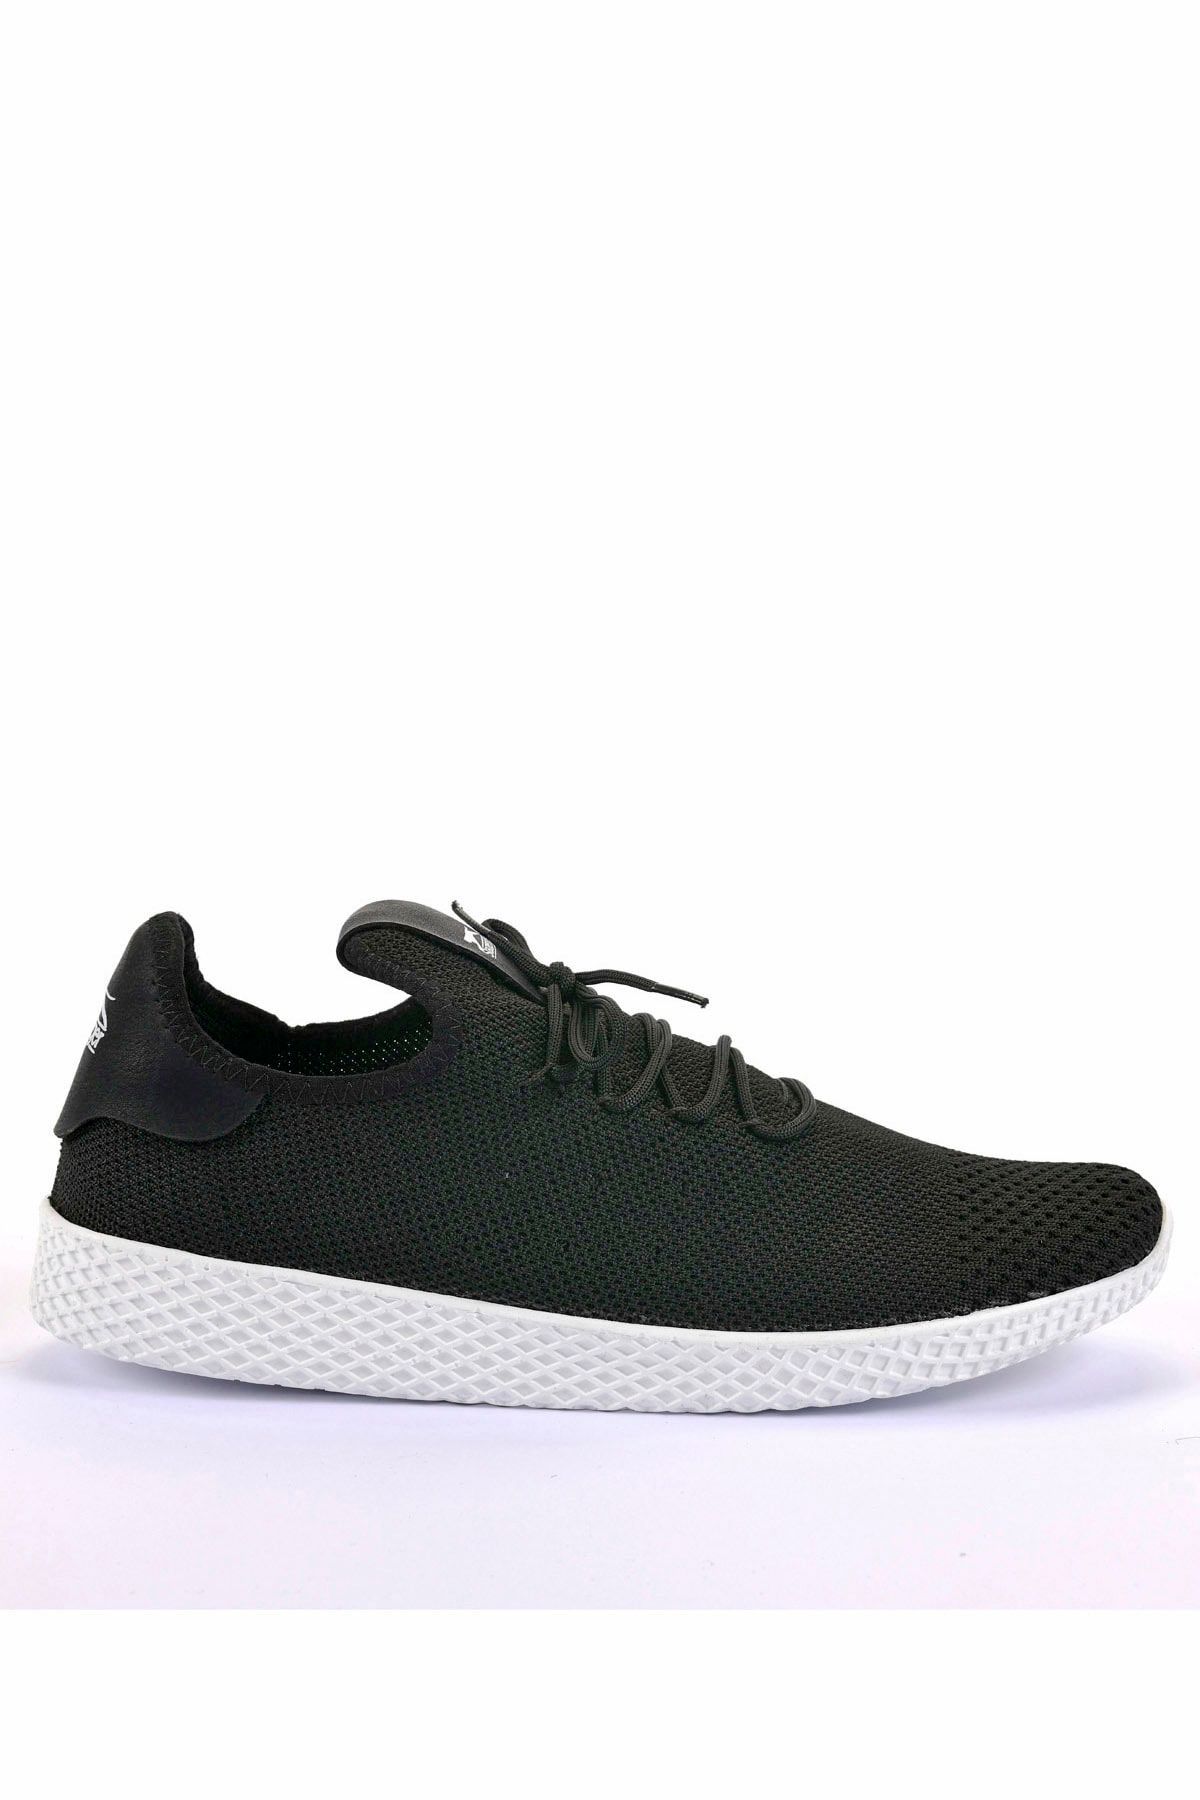 Slazenger Lucca Sneaker Erkek Ayakkabı Siyah Sa10re080